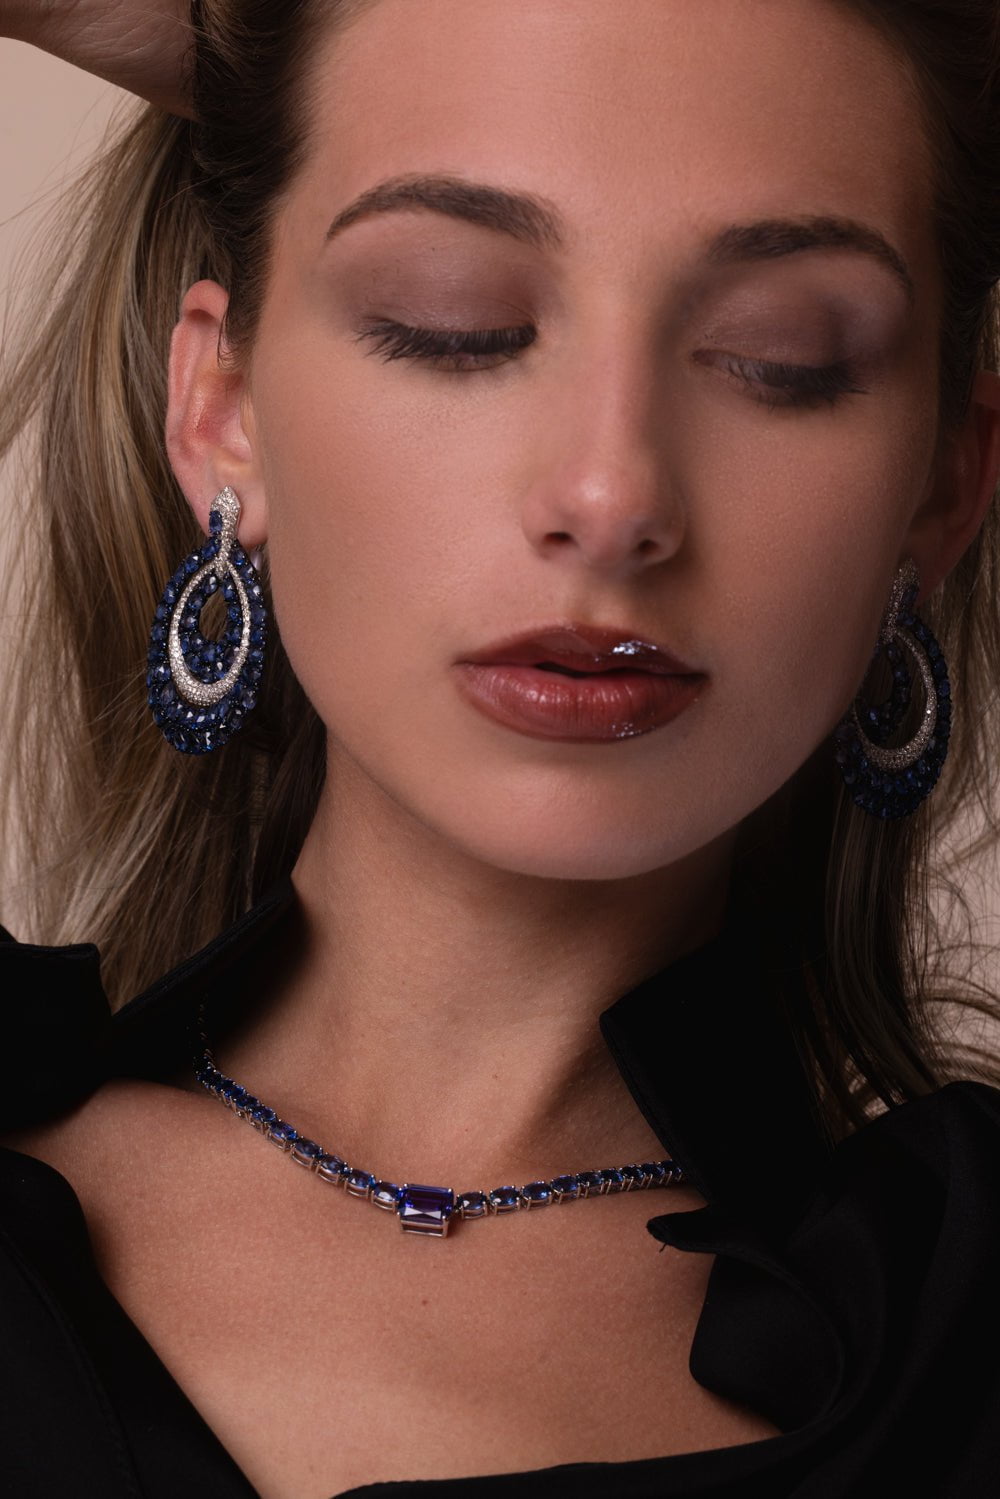 SUTRA-Blue Sapphire Drop Earrings-WHITE GOLD